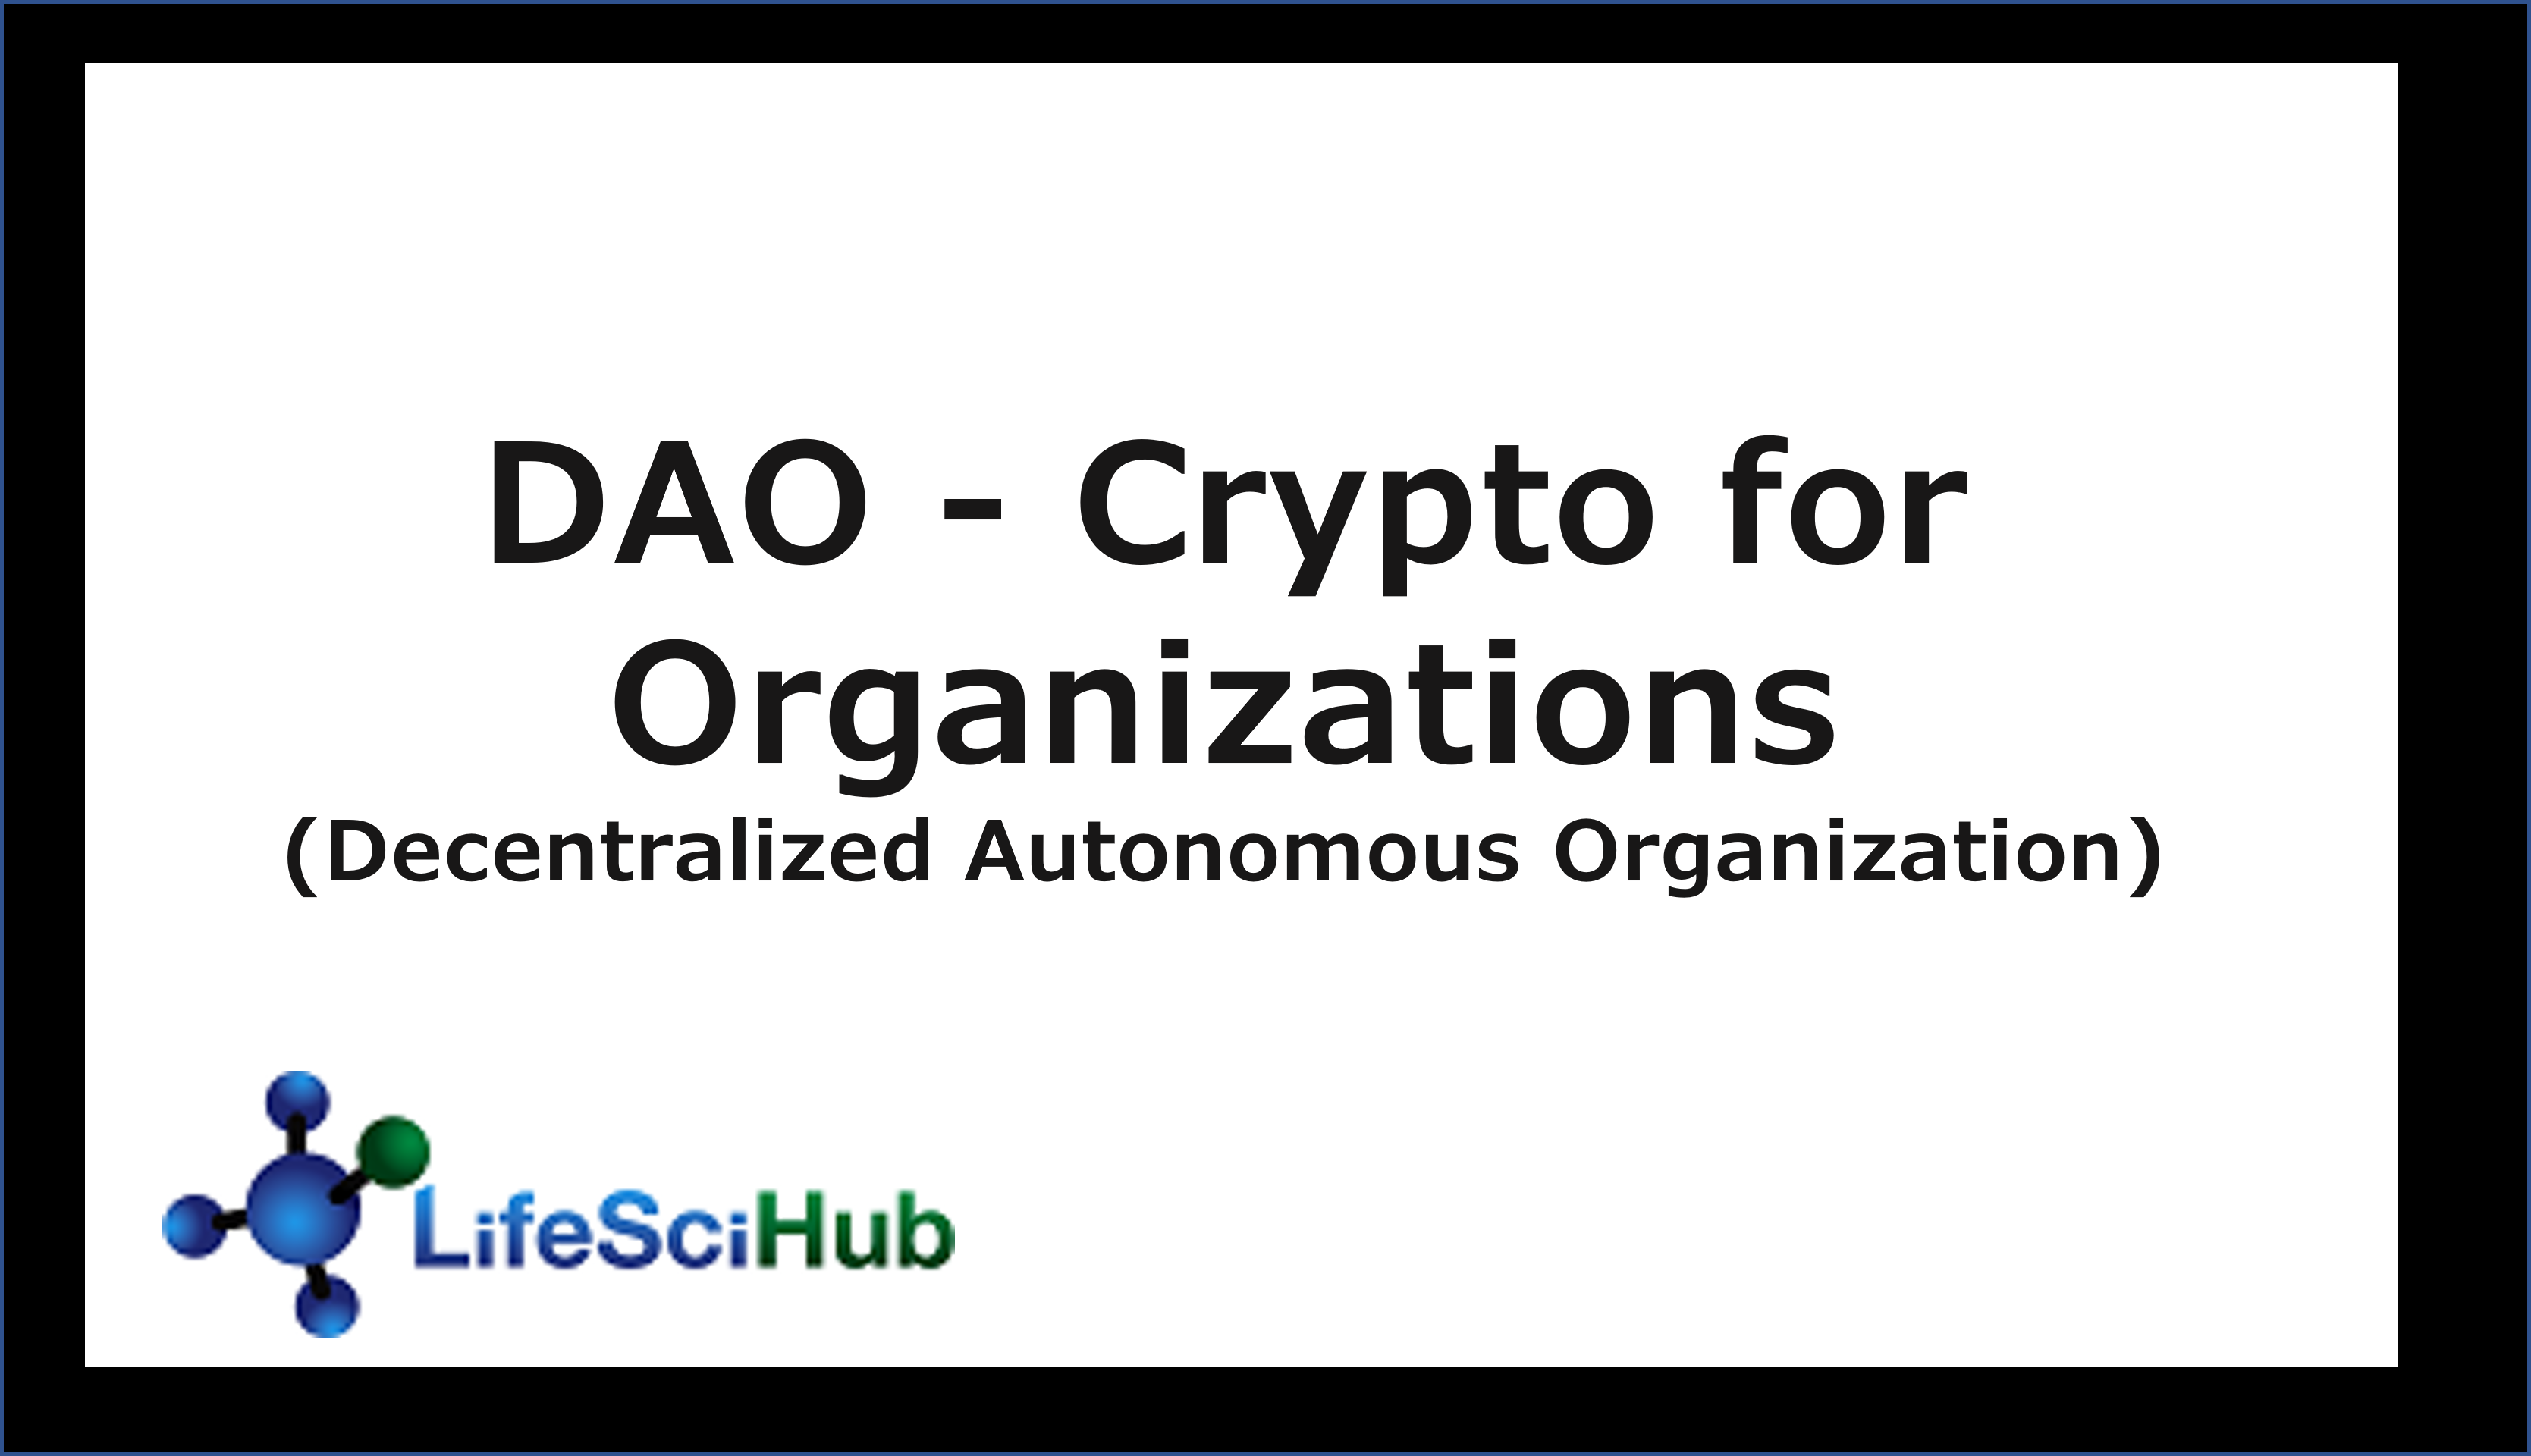 LifeSciHub as a DAO (Decentralized Autonomous Organization)- Organizational Crypto